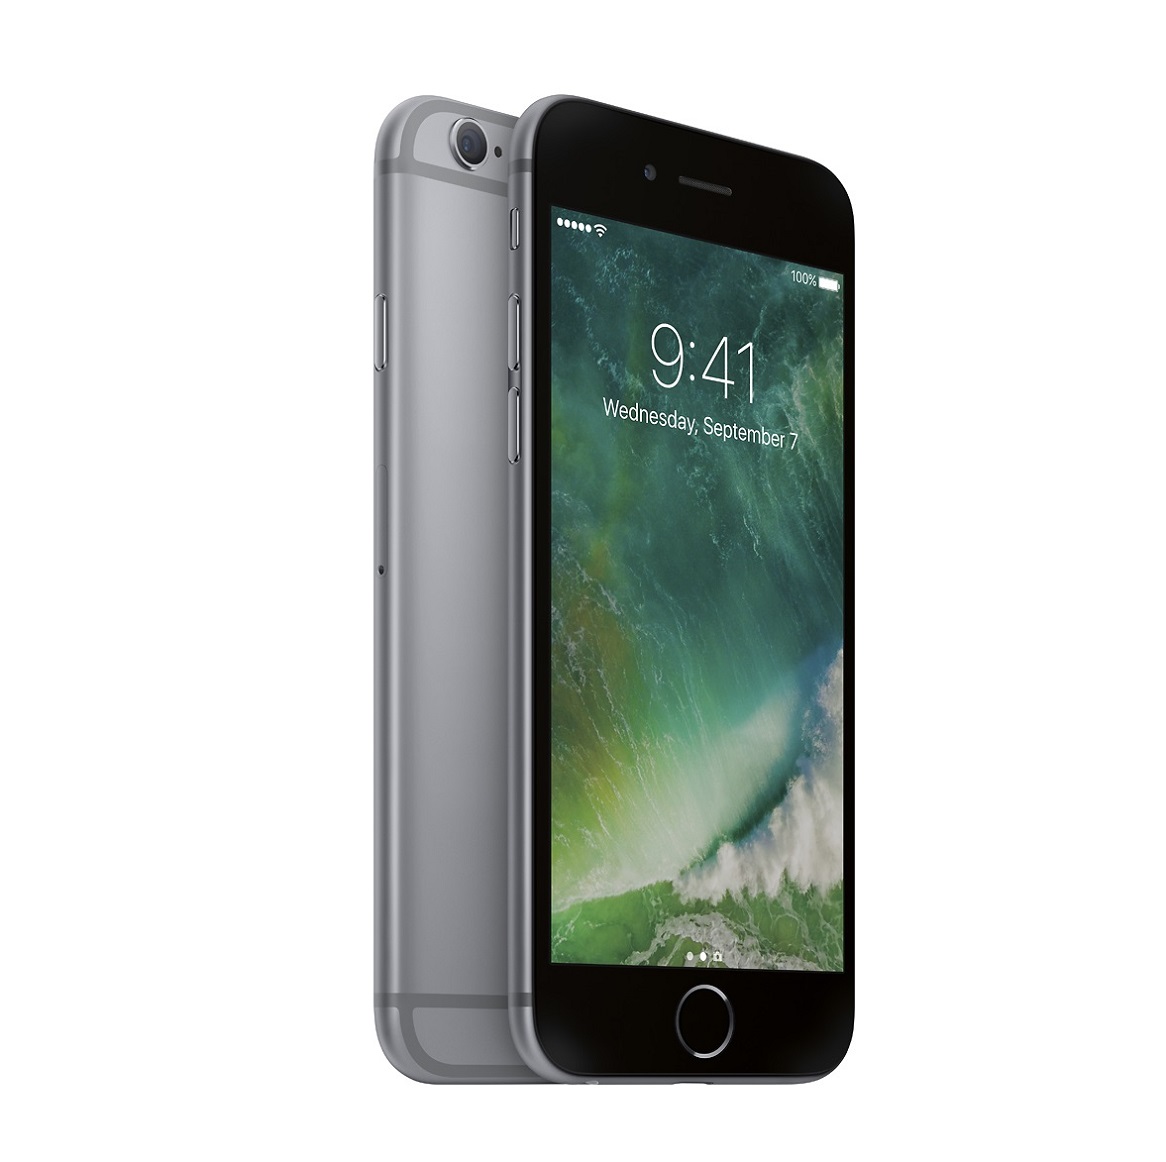 Apple iPhone 6s - 16GB - Space Gray (Unlocked) A1633 (CDMA + GSM)